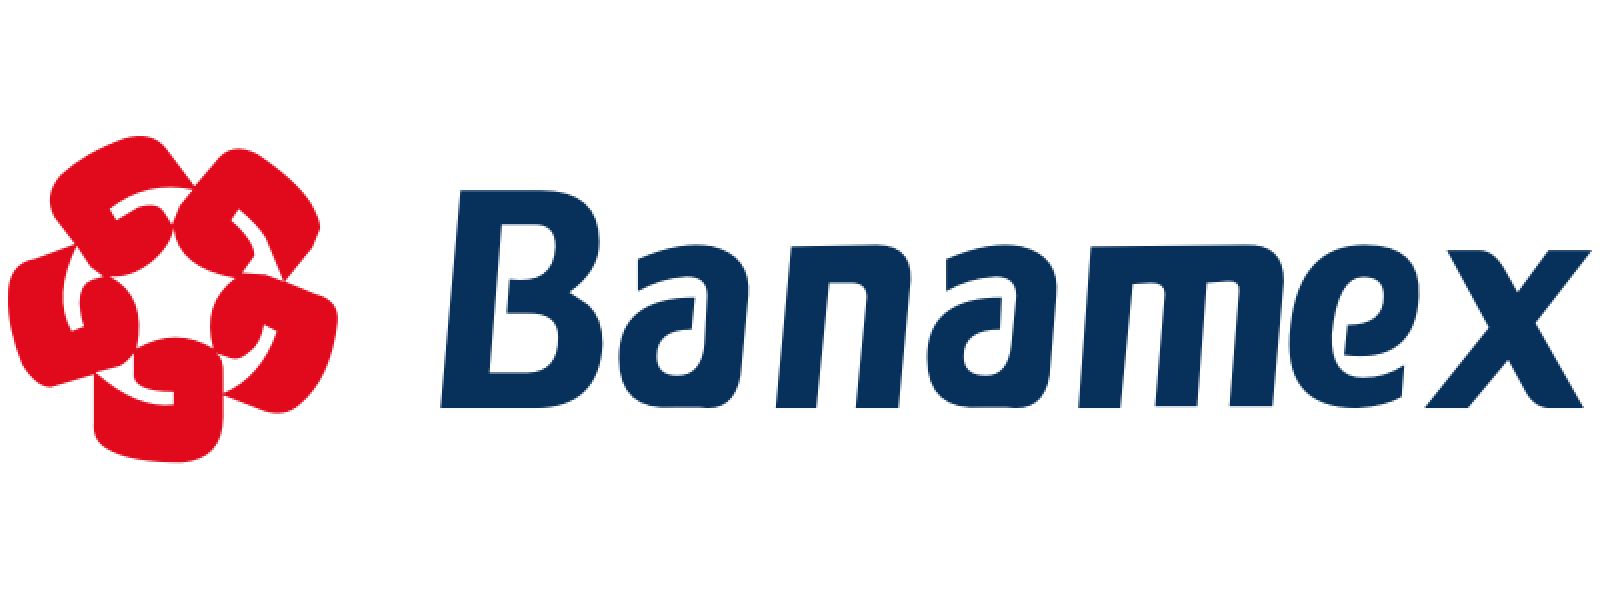 banamex